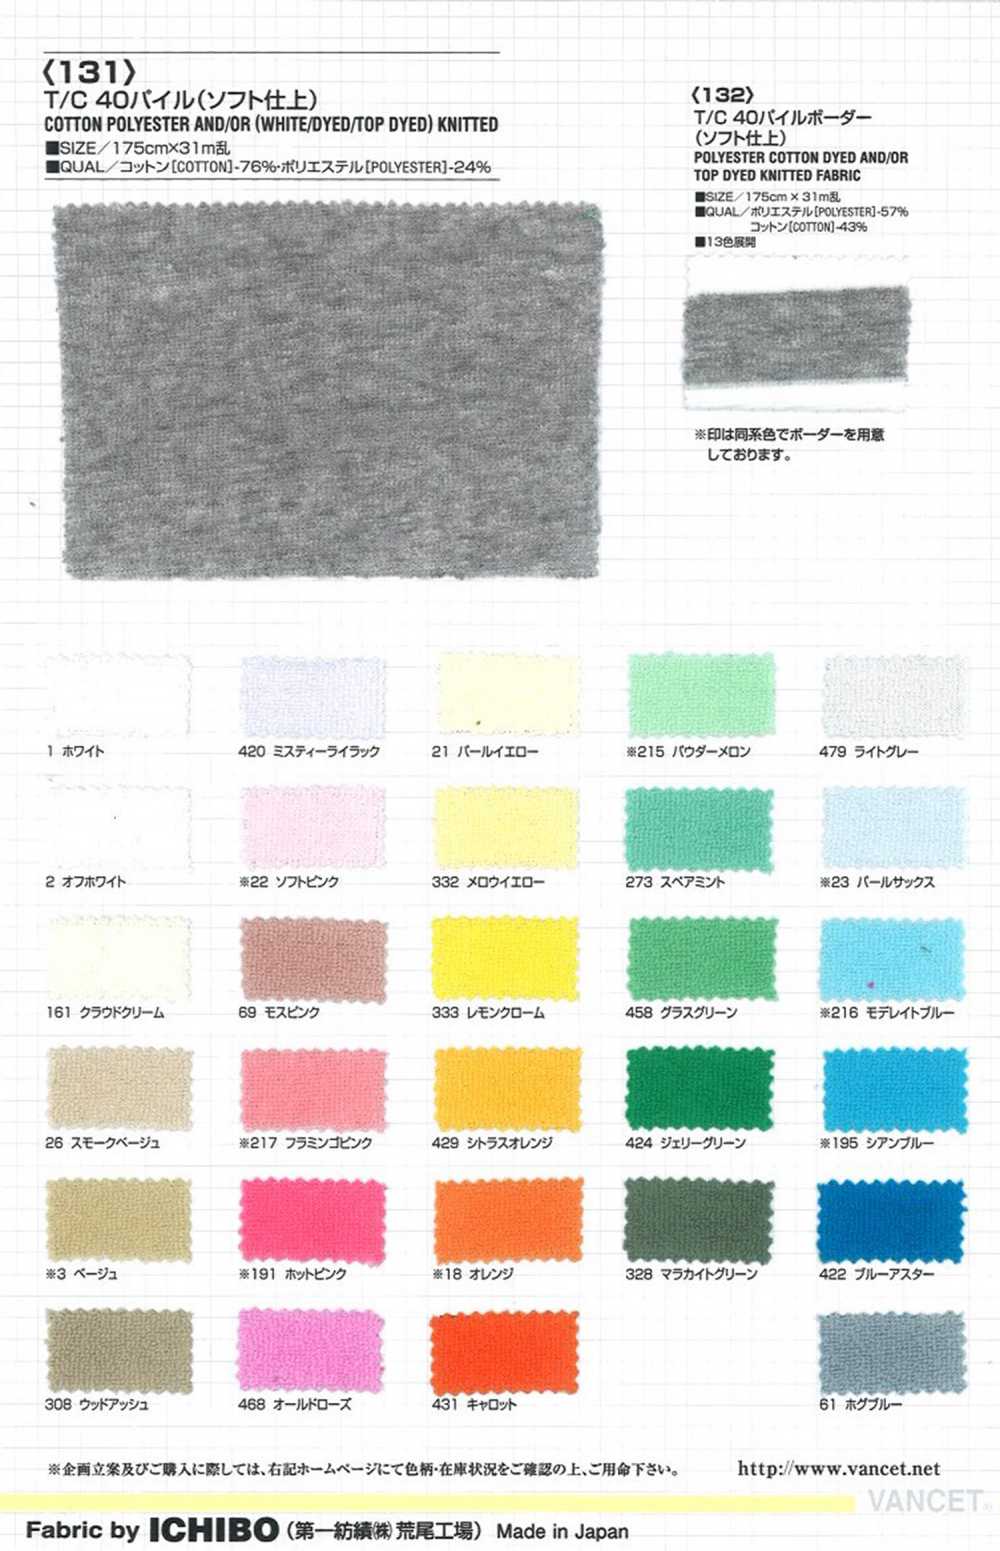 131 T / C 40 Pile (Soft Finish)[Textile / Fabric] VANCET